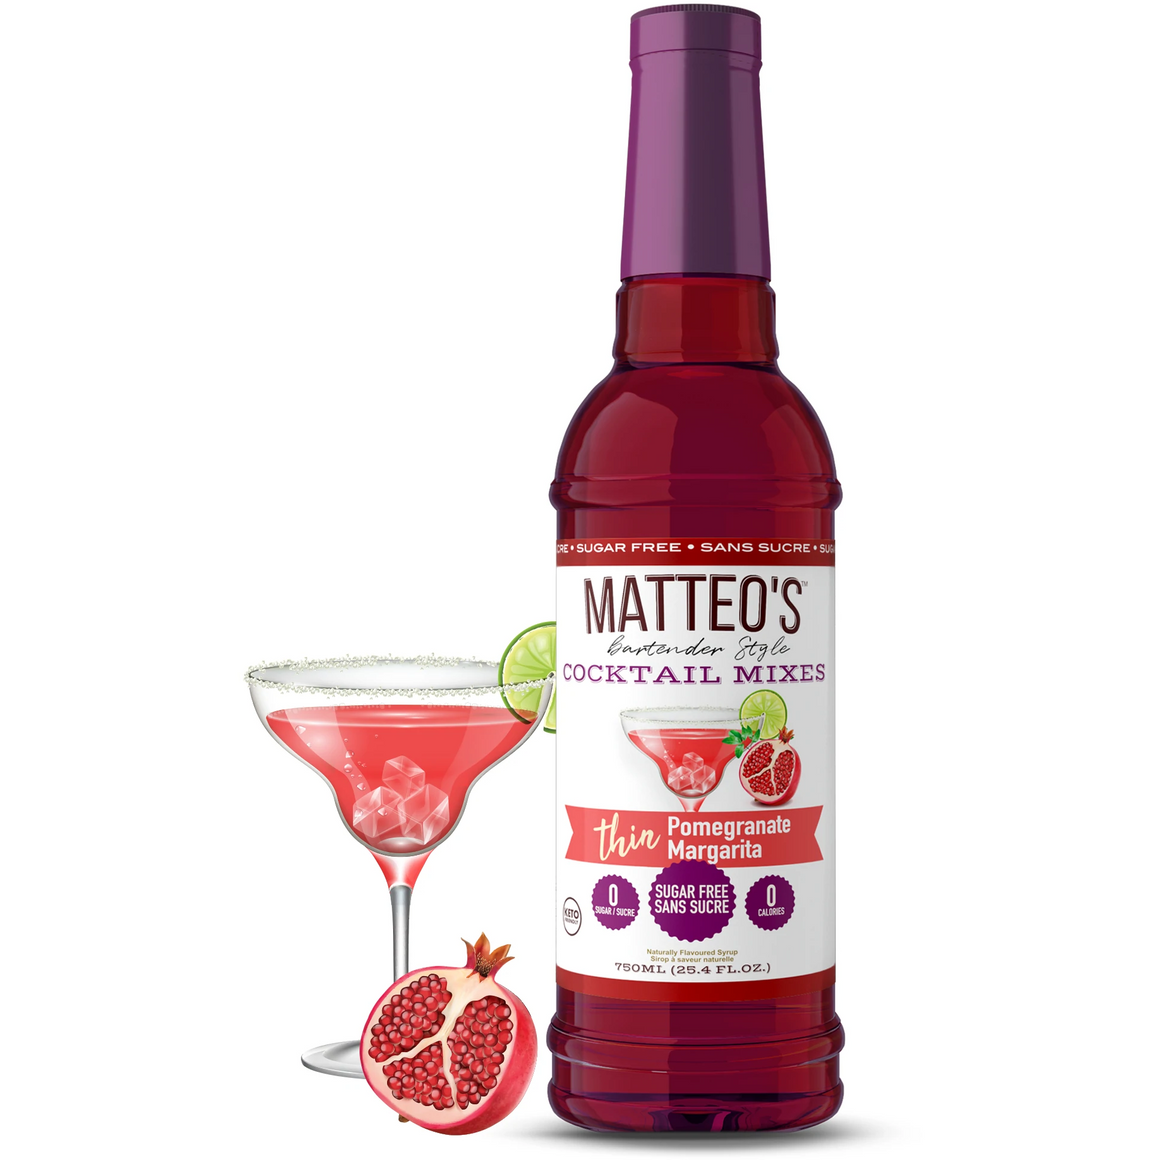 Matteo's - Sugar Free Cocktail Syrup - Pomegranate Margarita - 750mL